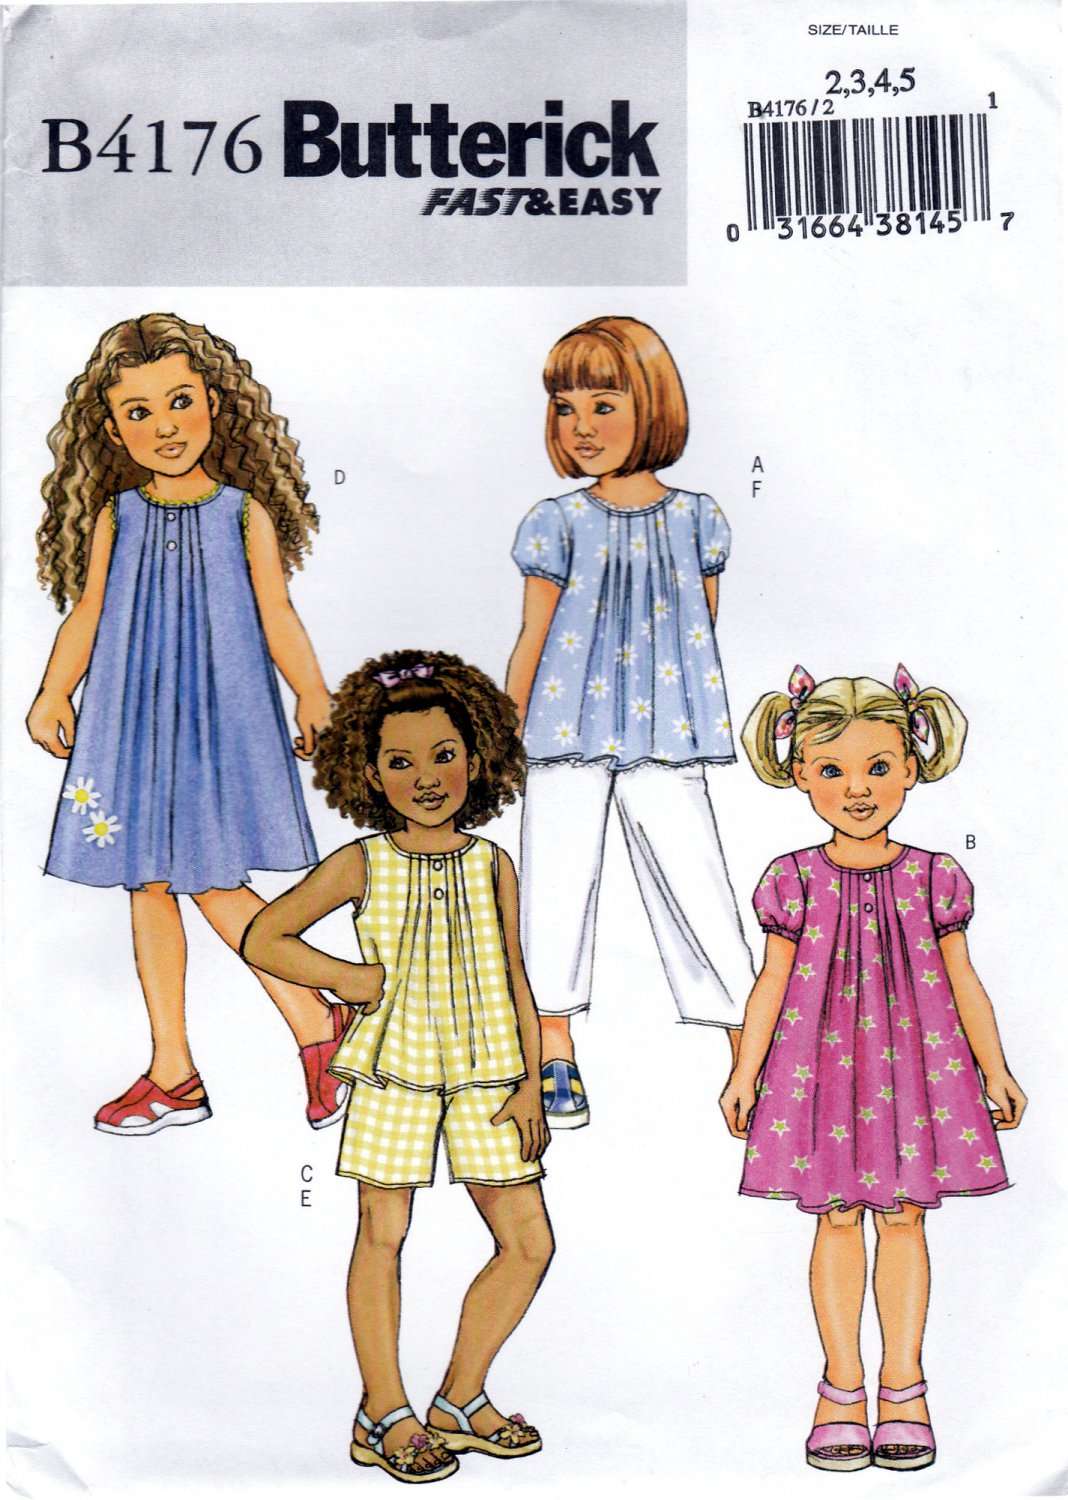 Butterick 4176 B4176 Girls Sewing Pattern Childrens Top Dress Shorts Pants Kids Sizes 2-3-4-5 Easy